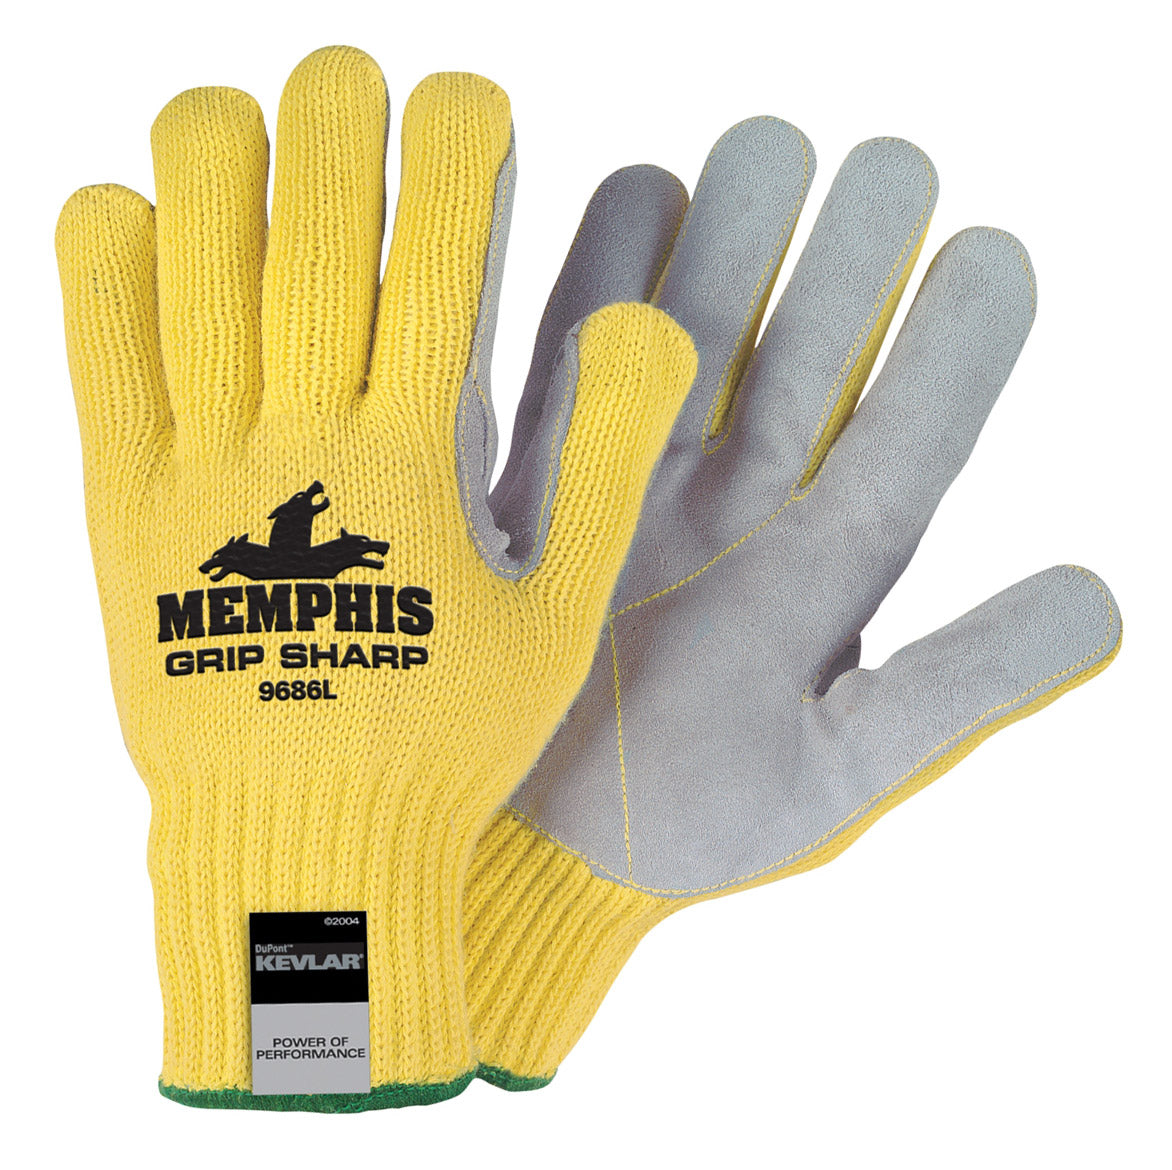 Memphis Grip Sharp Kevlar Shell Leather Palm Gloves, 9686